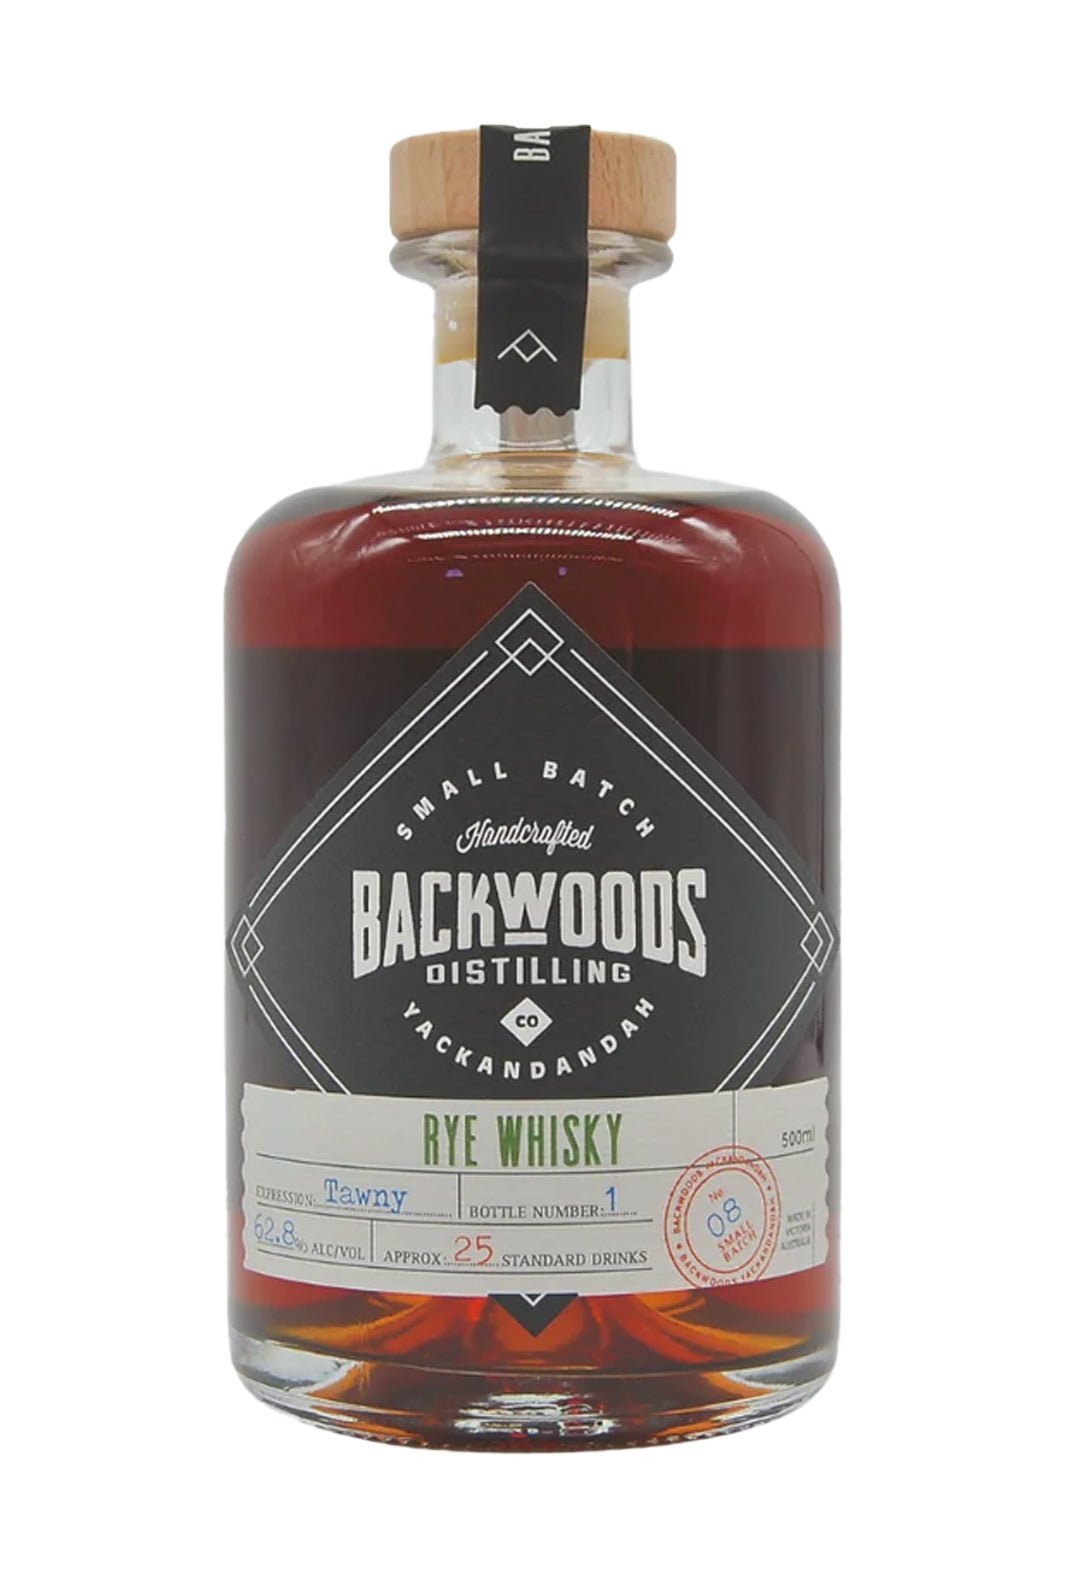 Backwoods Rye Whisky Tawny Cask Batch 8 62.88% 500ml | Whisky | Shop online at Spirits of France